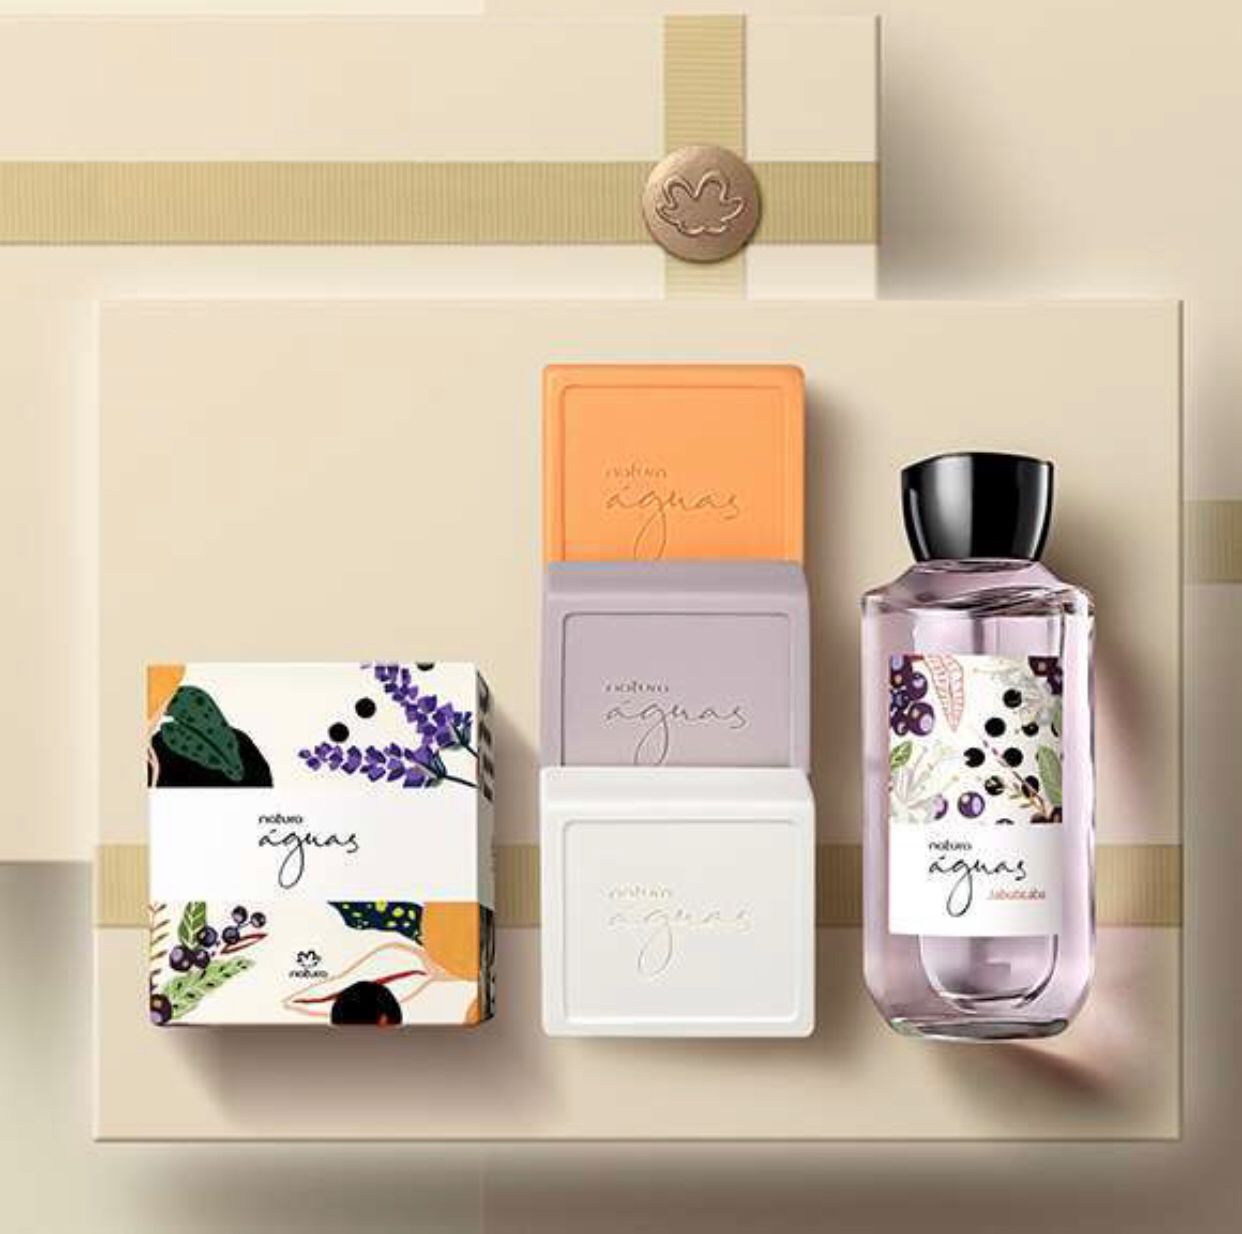 Perfume & Cia – By Mabi – Perfumaria e cosméticos